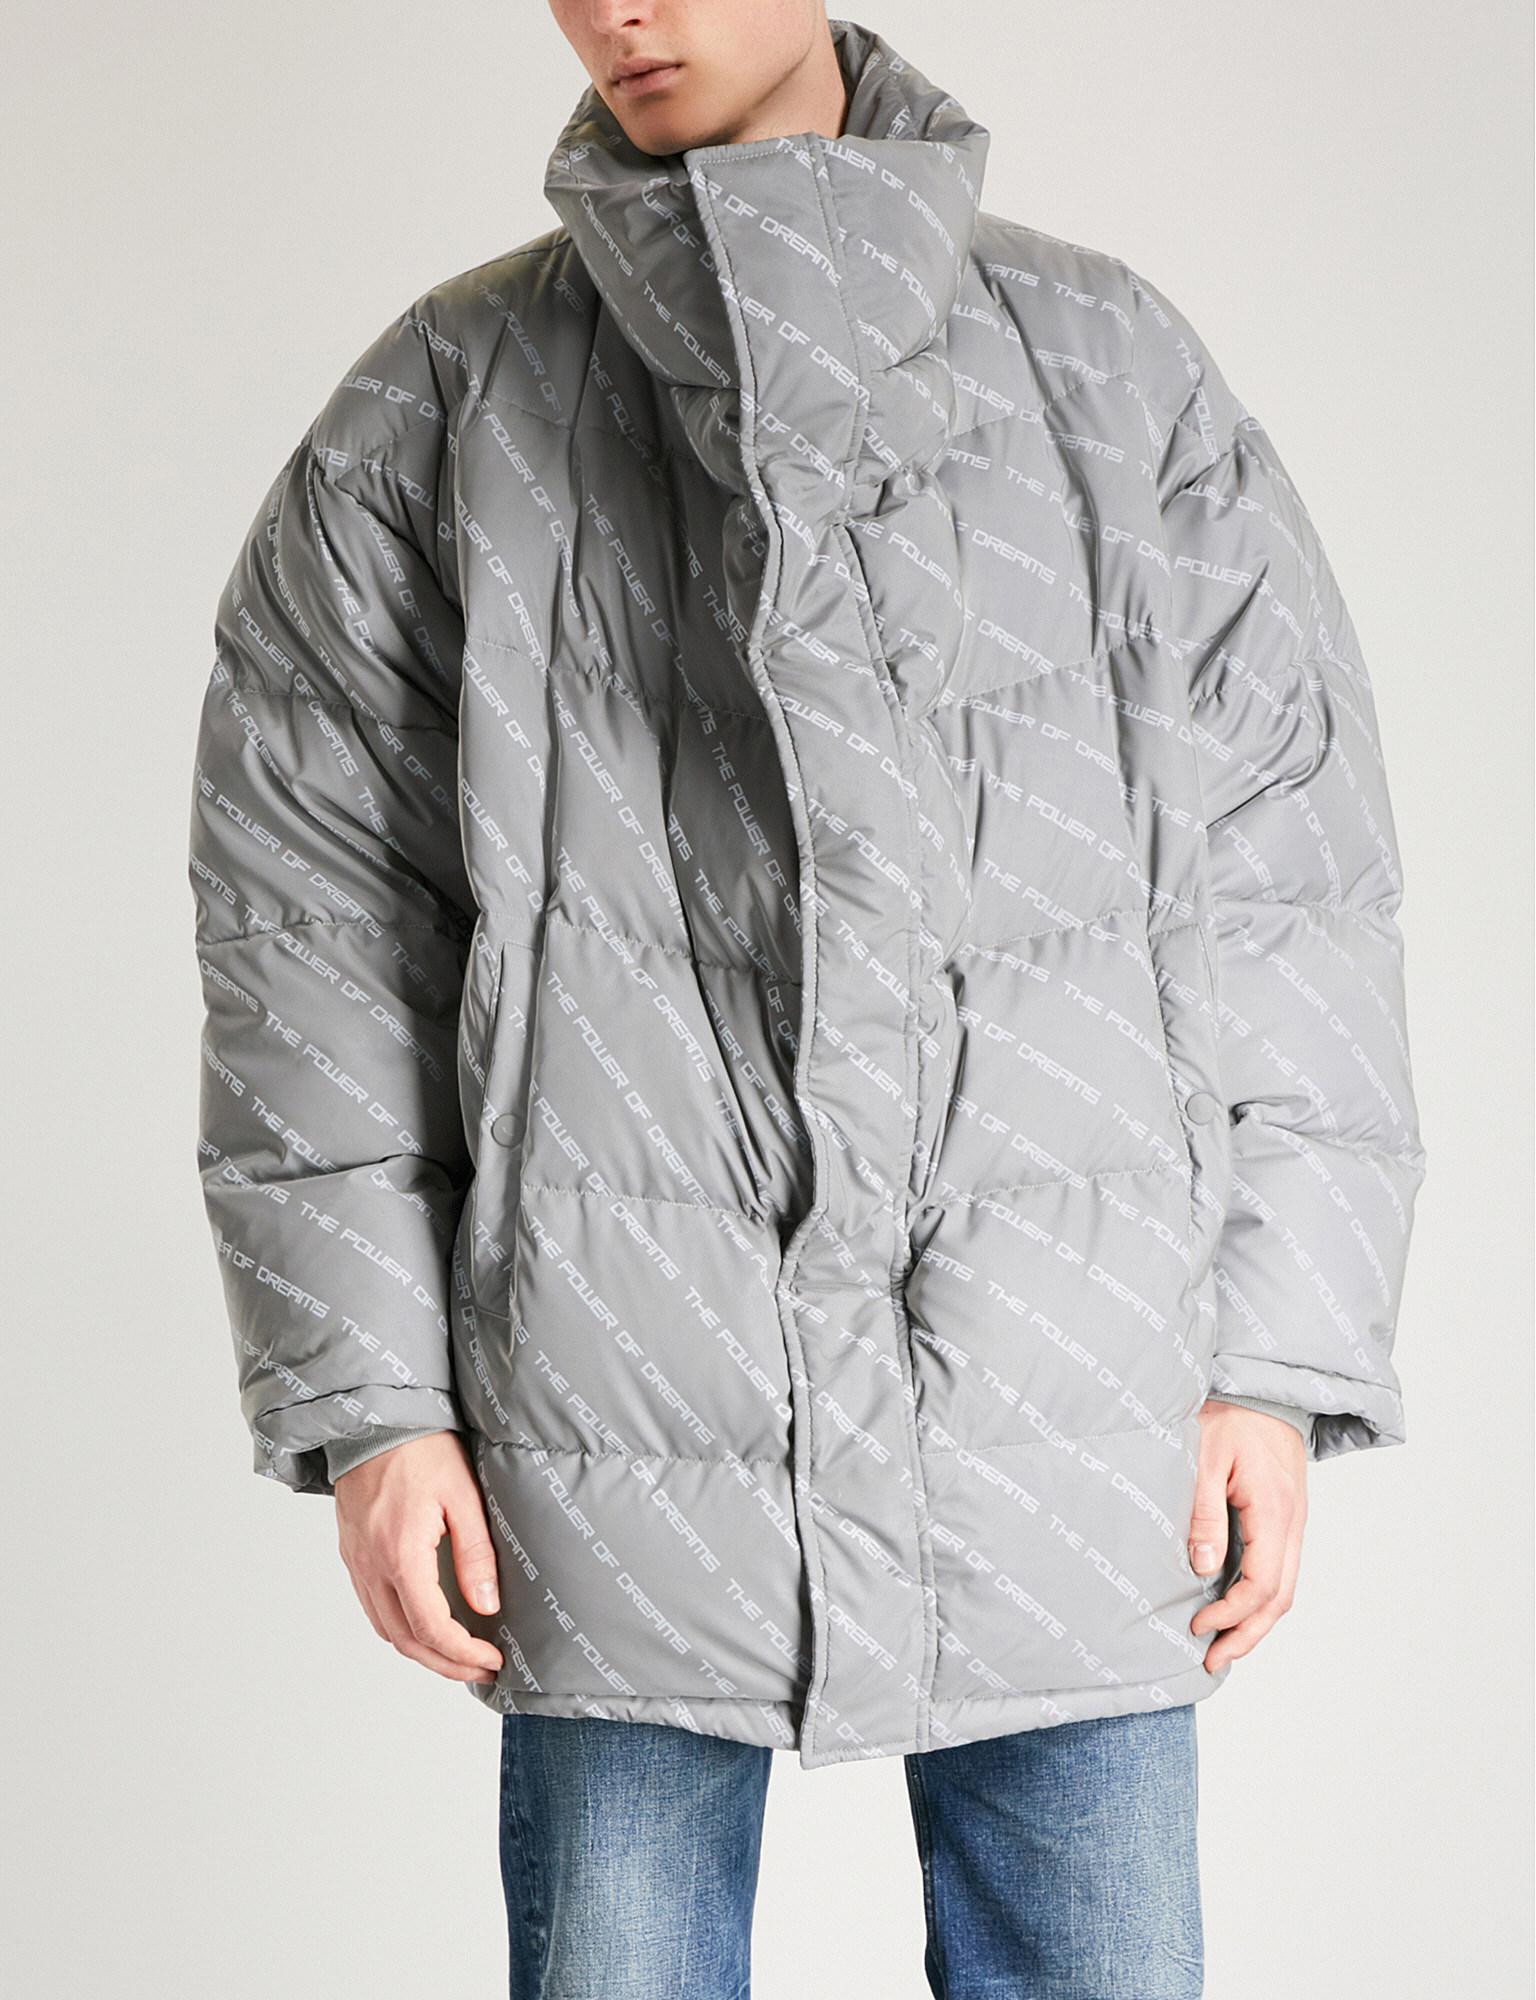 Balenciaga Reflective Shell-down Puffer Jacket in Gray for Men - Lyst